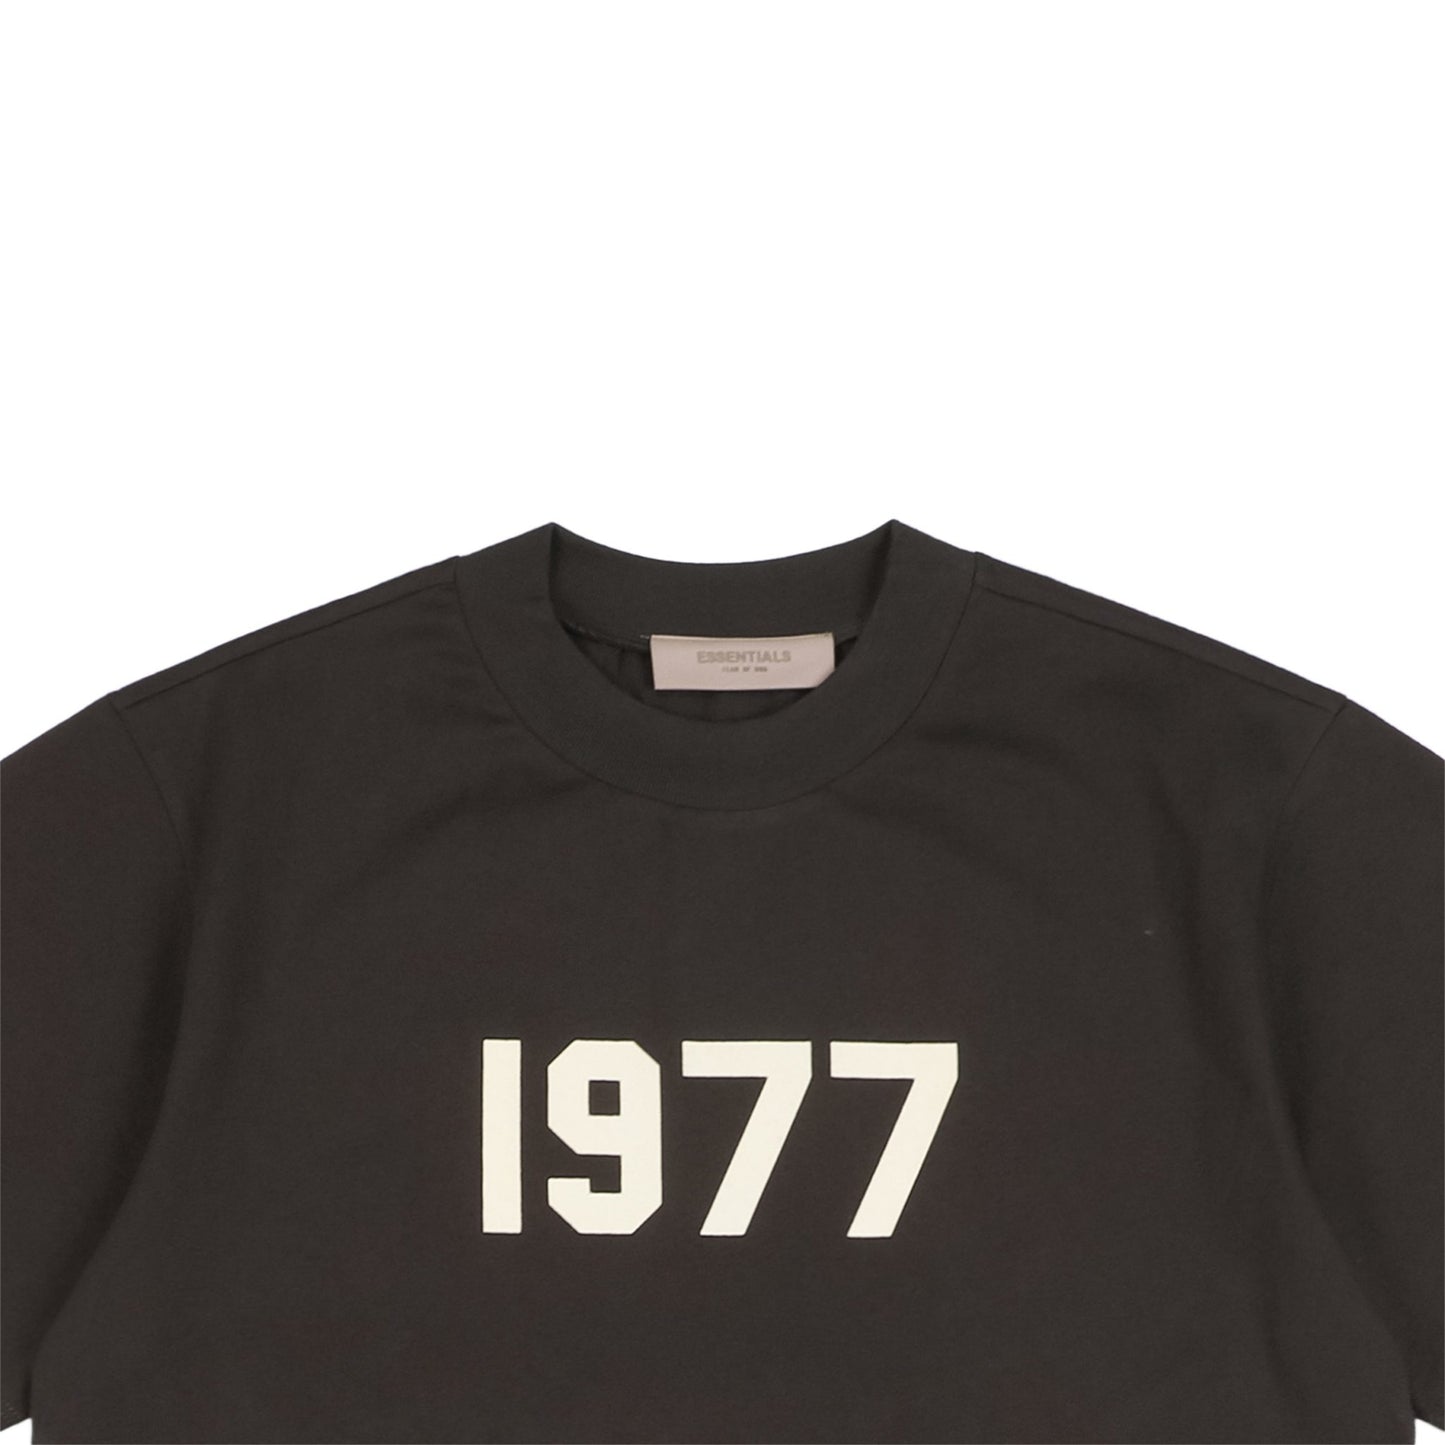 FOG Black 1977 E55ential5 T-Shirt